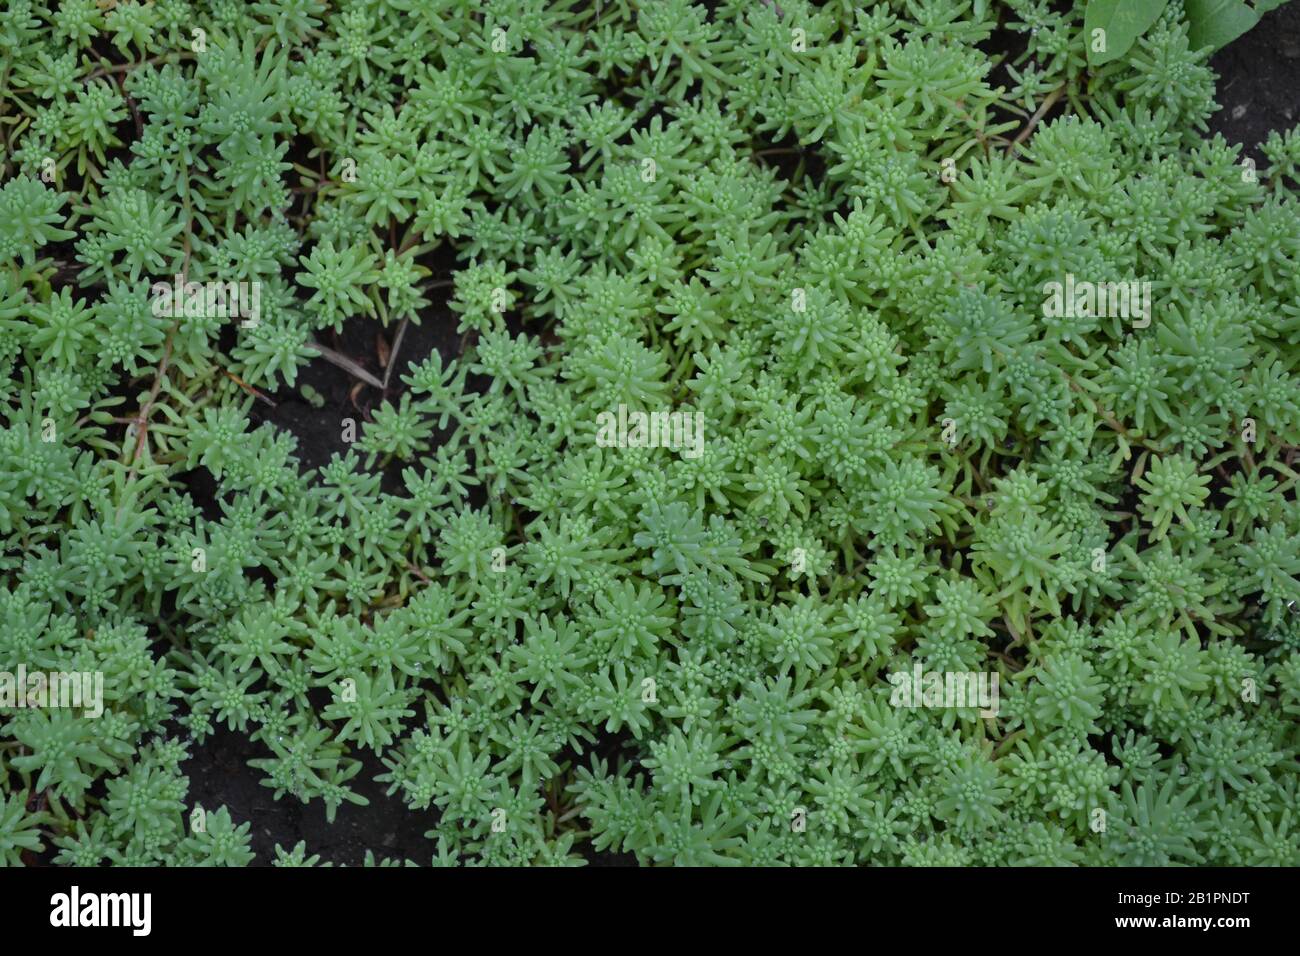 Hare cabbage. Stonecrop.  Sedum. Green moss. Decorative grassy carpet. Horizontal Stock Photo